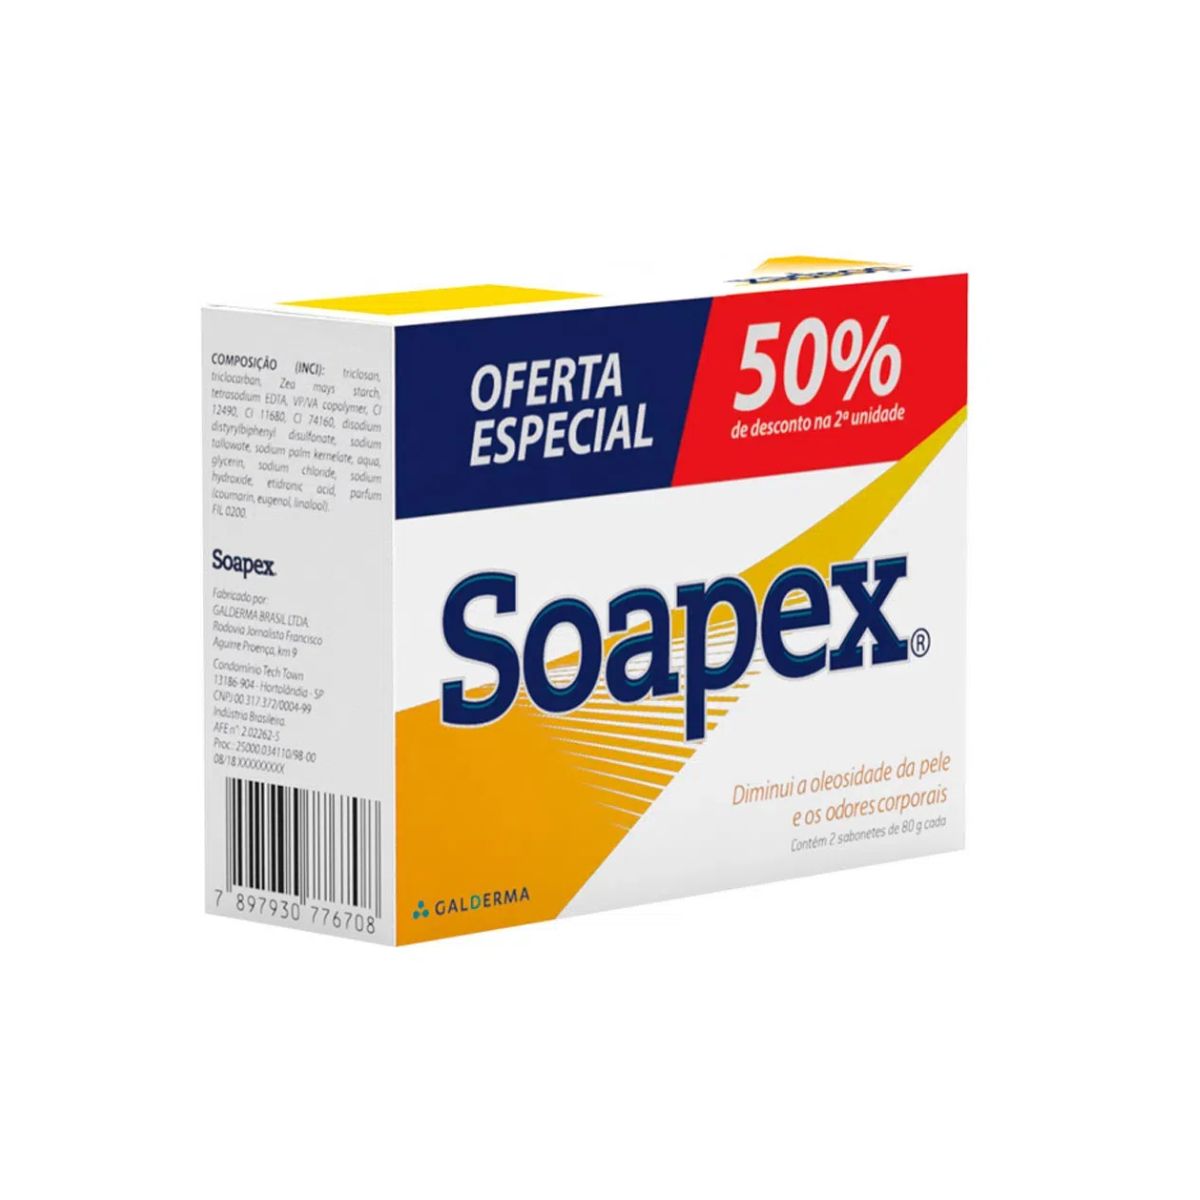 soapex-original-80g-kit-50%-desc-2?un-1.jpg